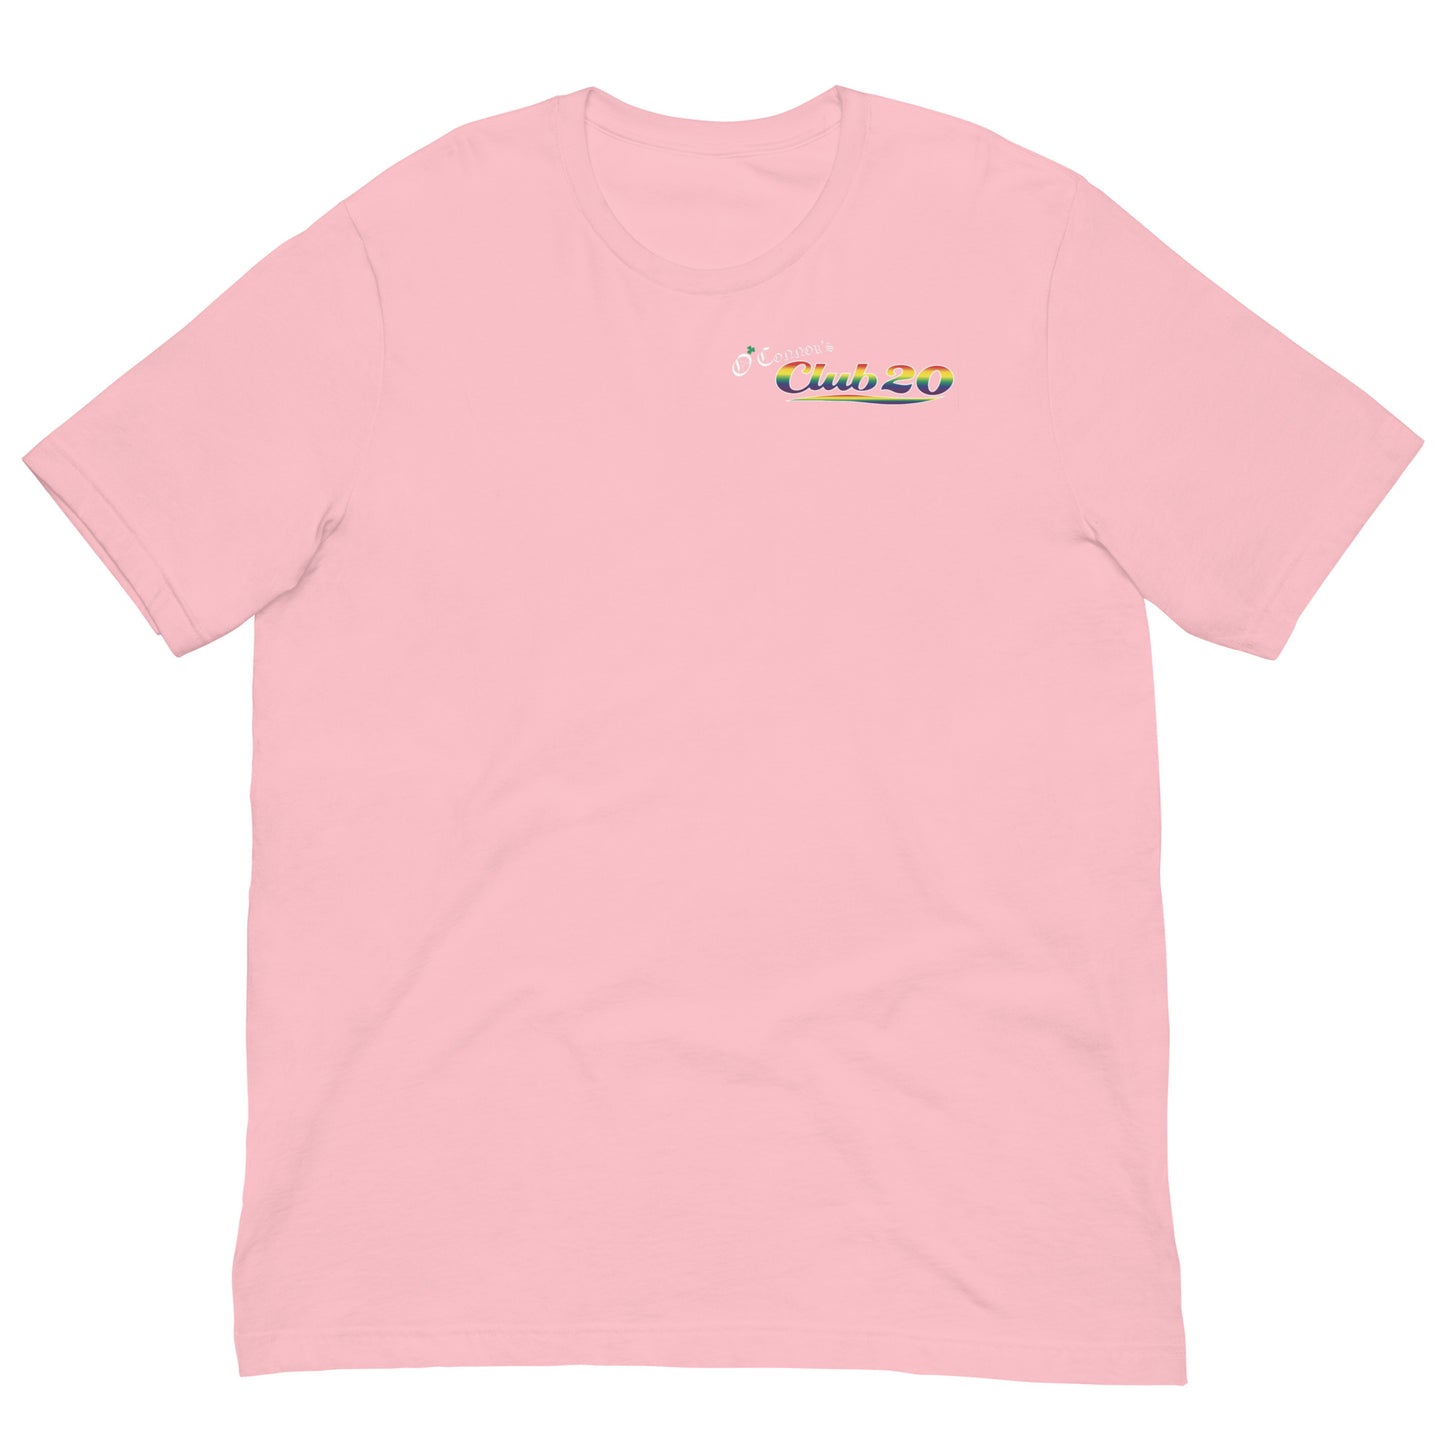 O'Connors Club 20 T-Shirt